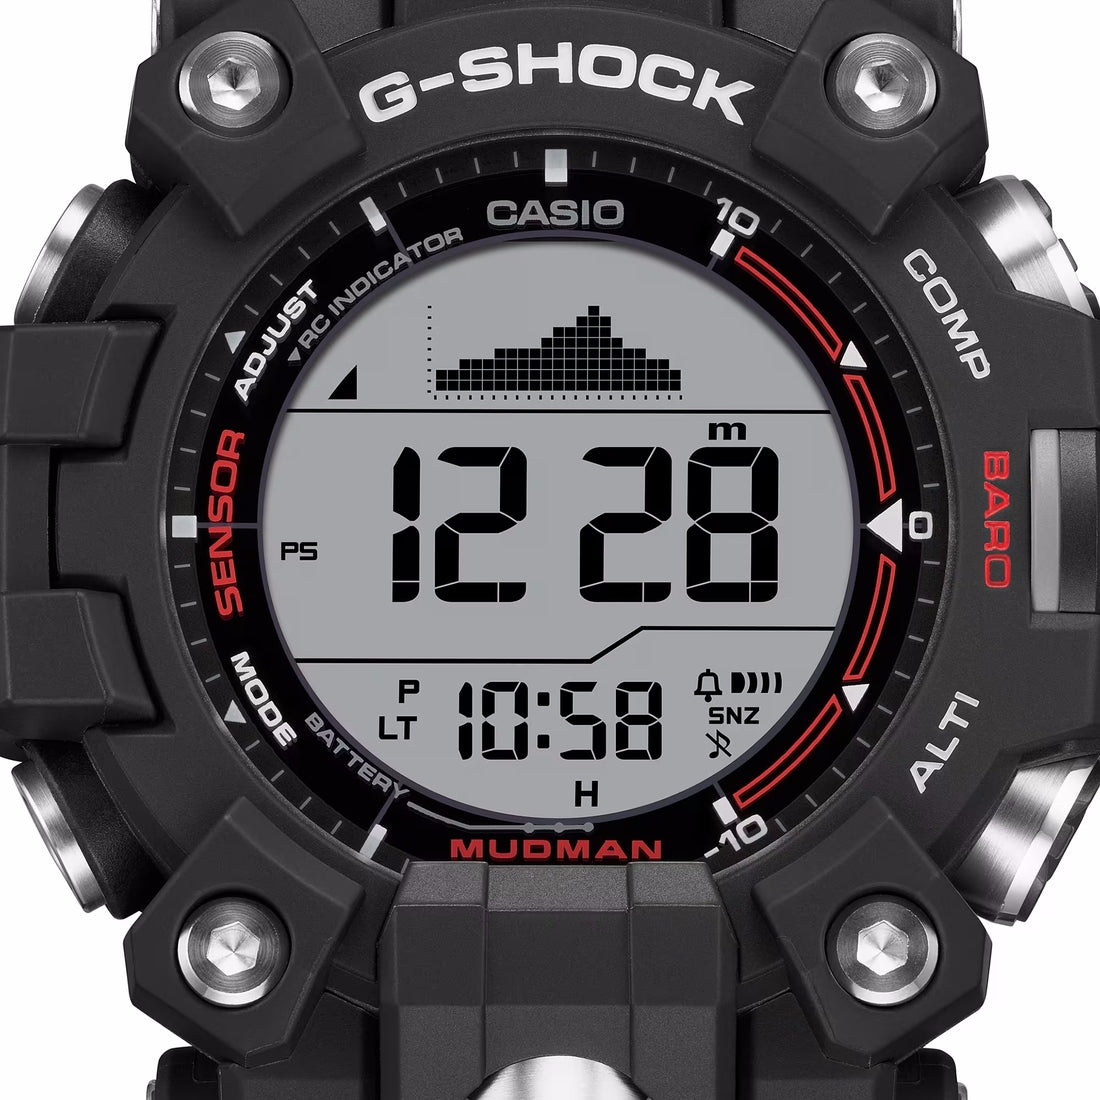 Orologio Casio G-Shock GW-9500-1ER Mudman nero